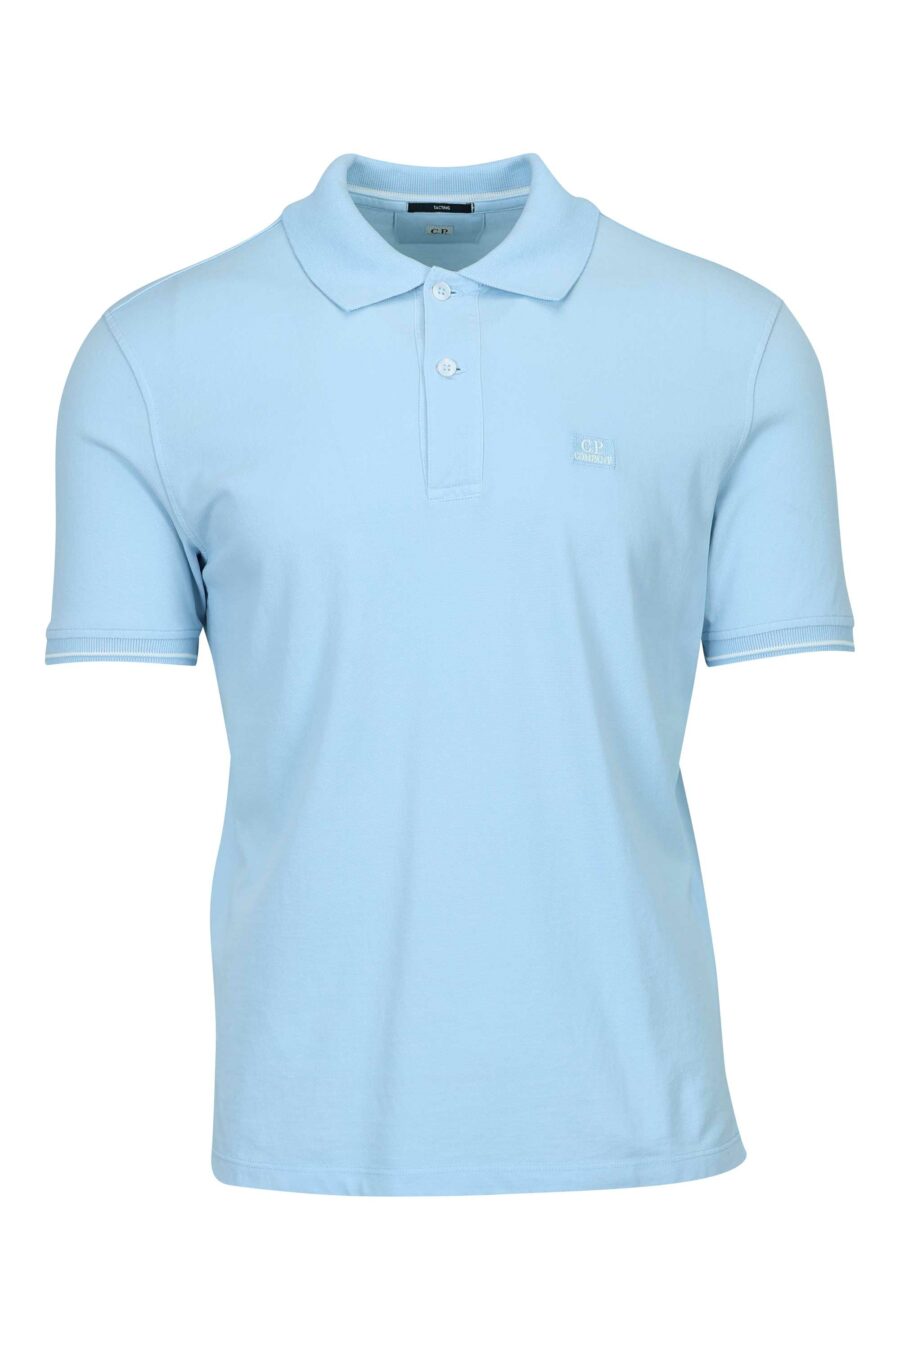 Light blue duotone polo shirt with mini logo patch "cp" - 7620943775136